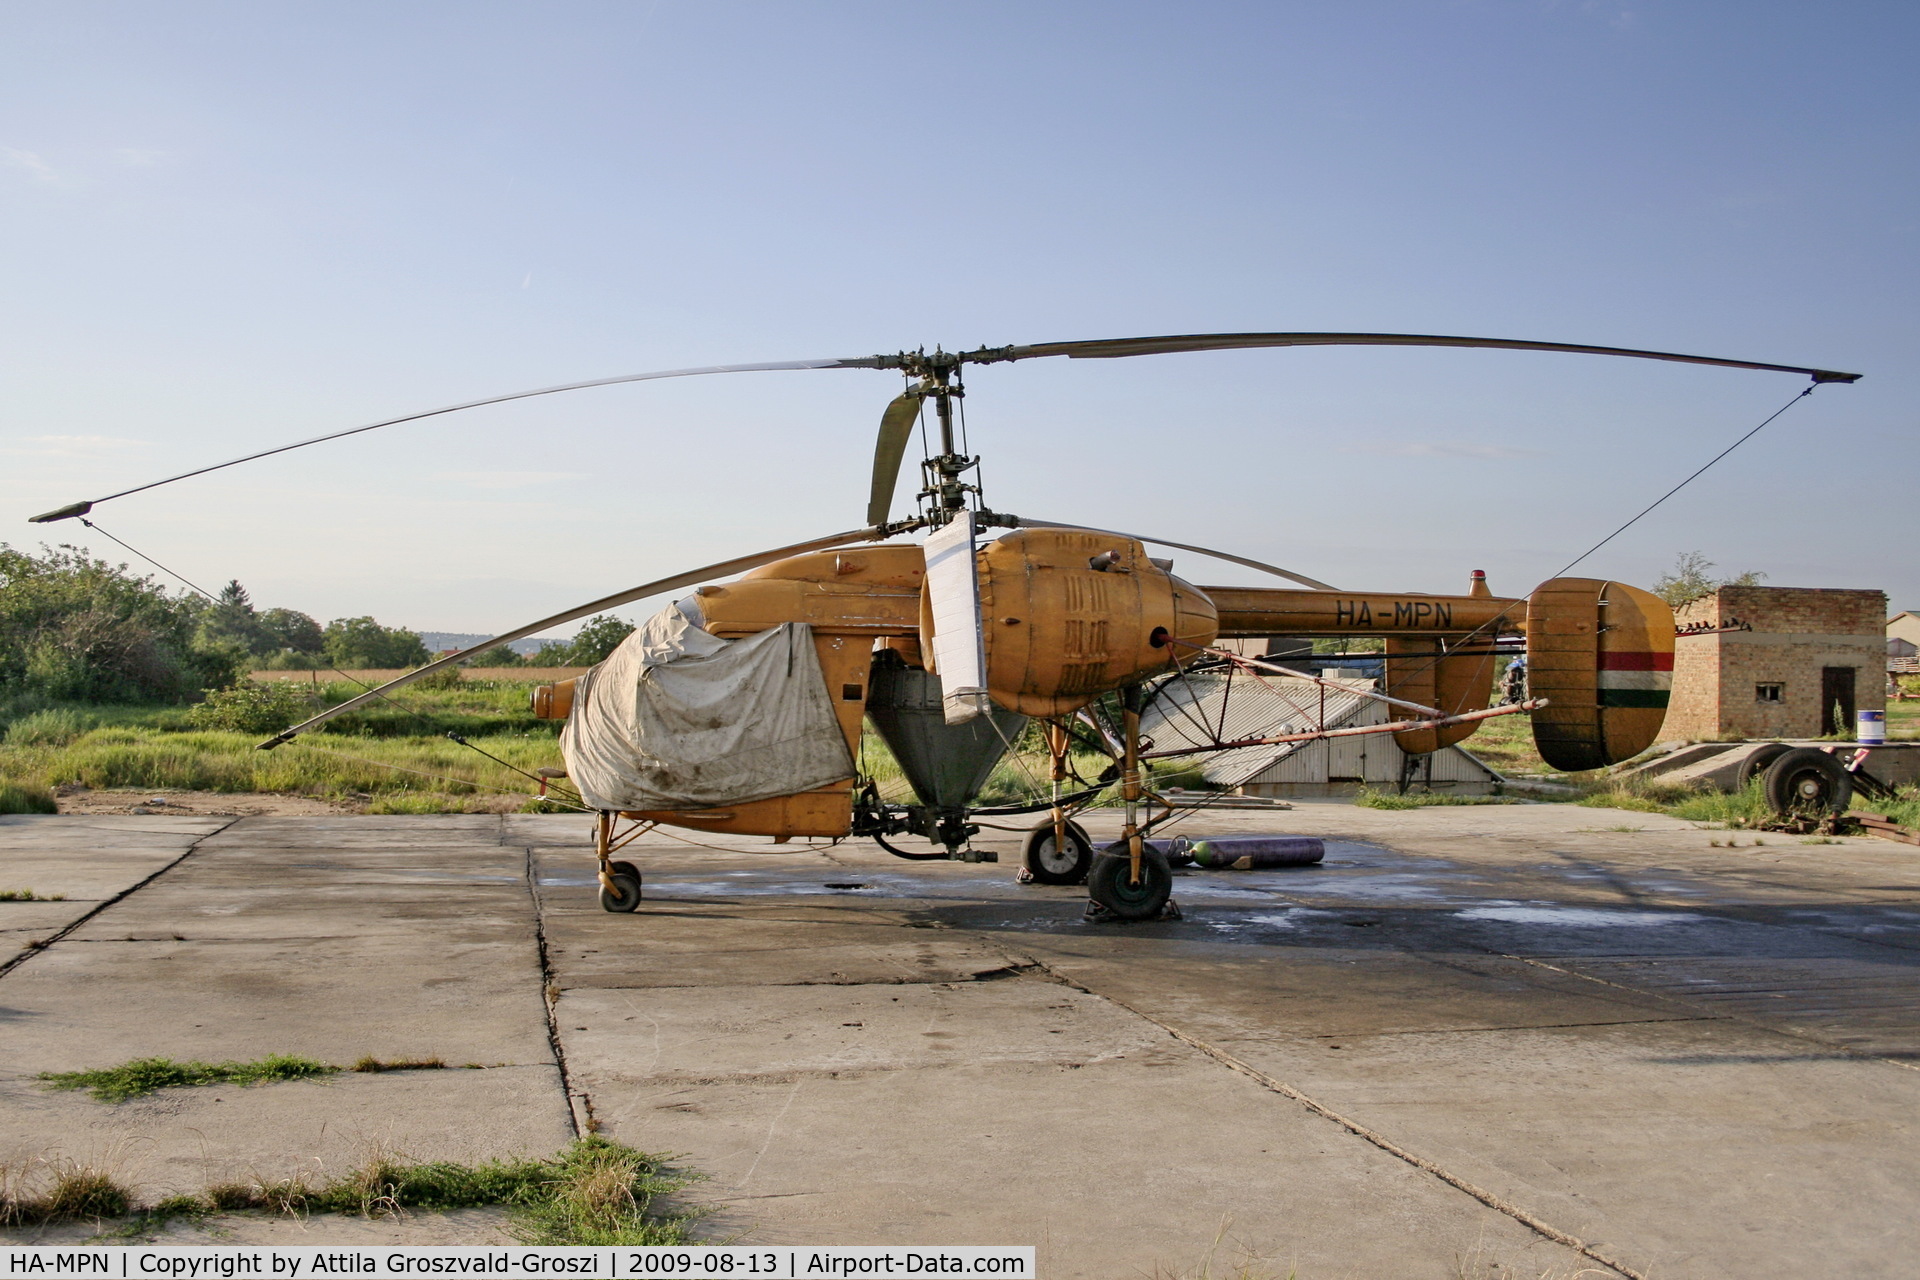 HA-MPN, 1978 Kamov Ka-26 Hoodlum C/N 7806312, Tata, agricultural depot, take-off field, Hungary